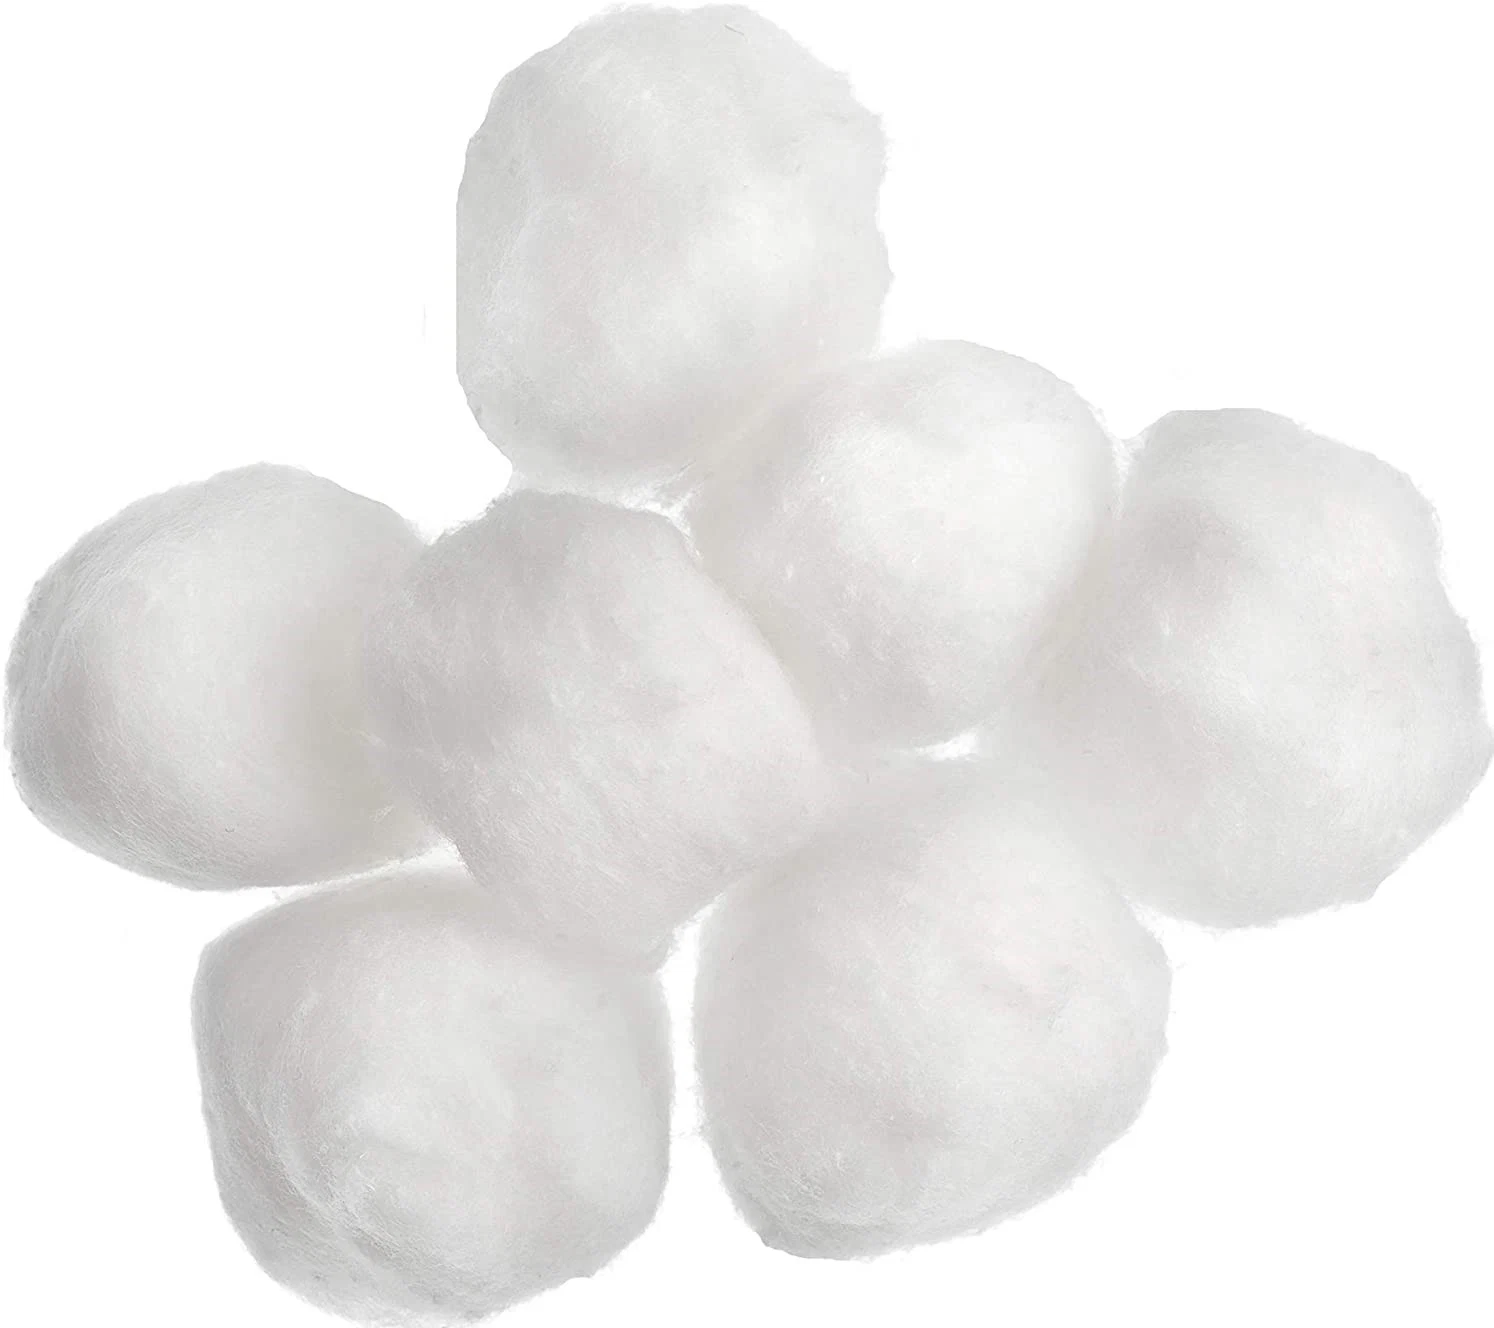 Sterile Cotton Wool Balls Medical Materials & Accessories Class III White Personal Care 100% Cotton 100/150/200 PCS Per Bag